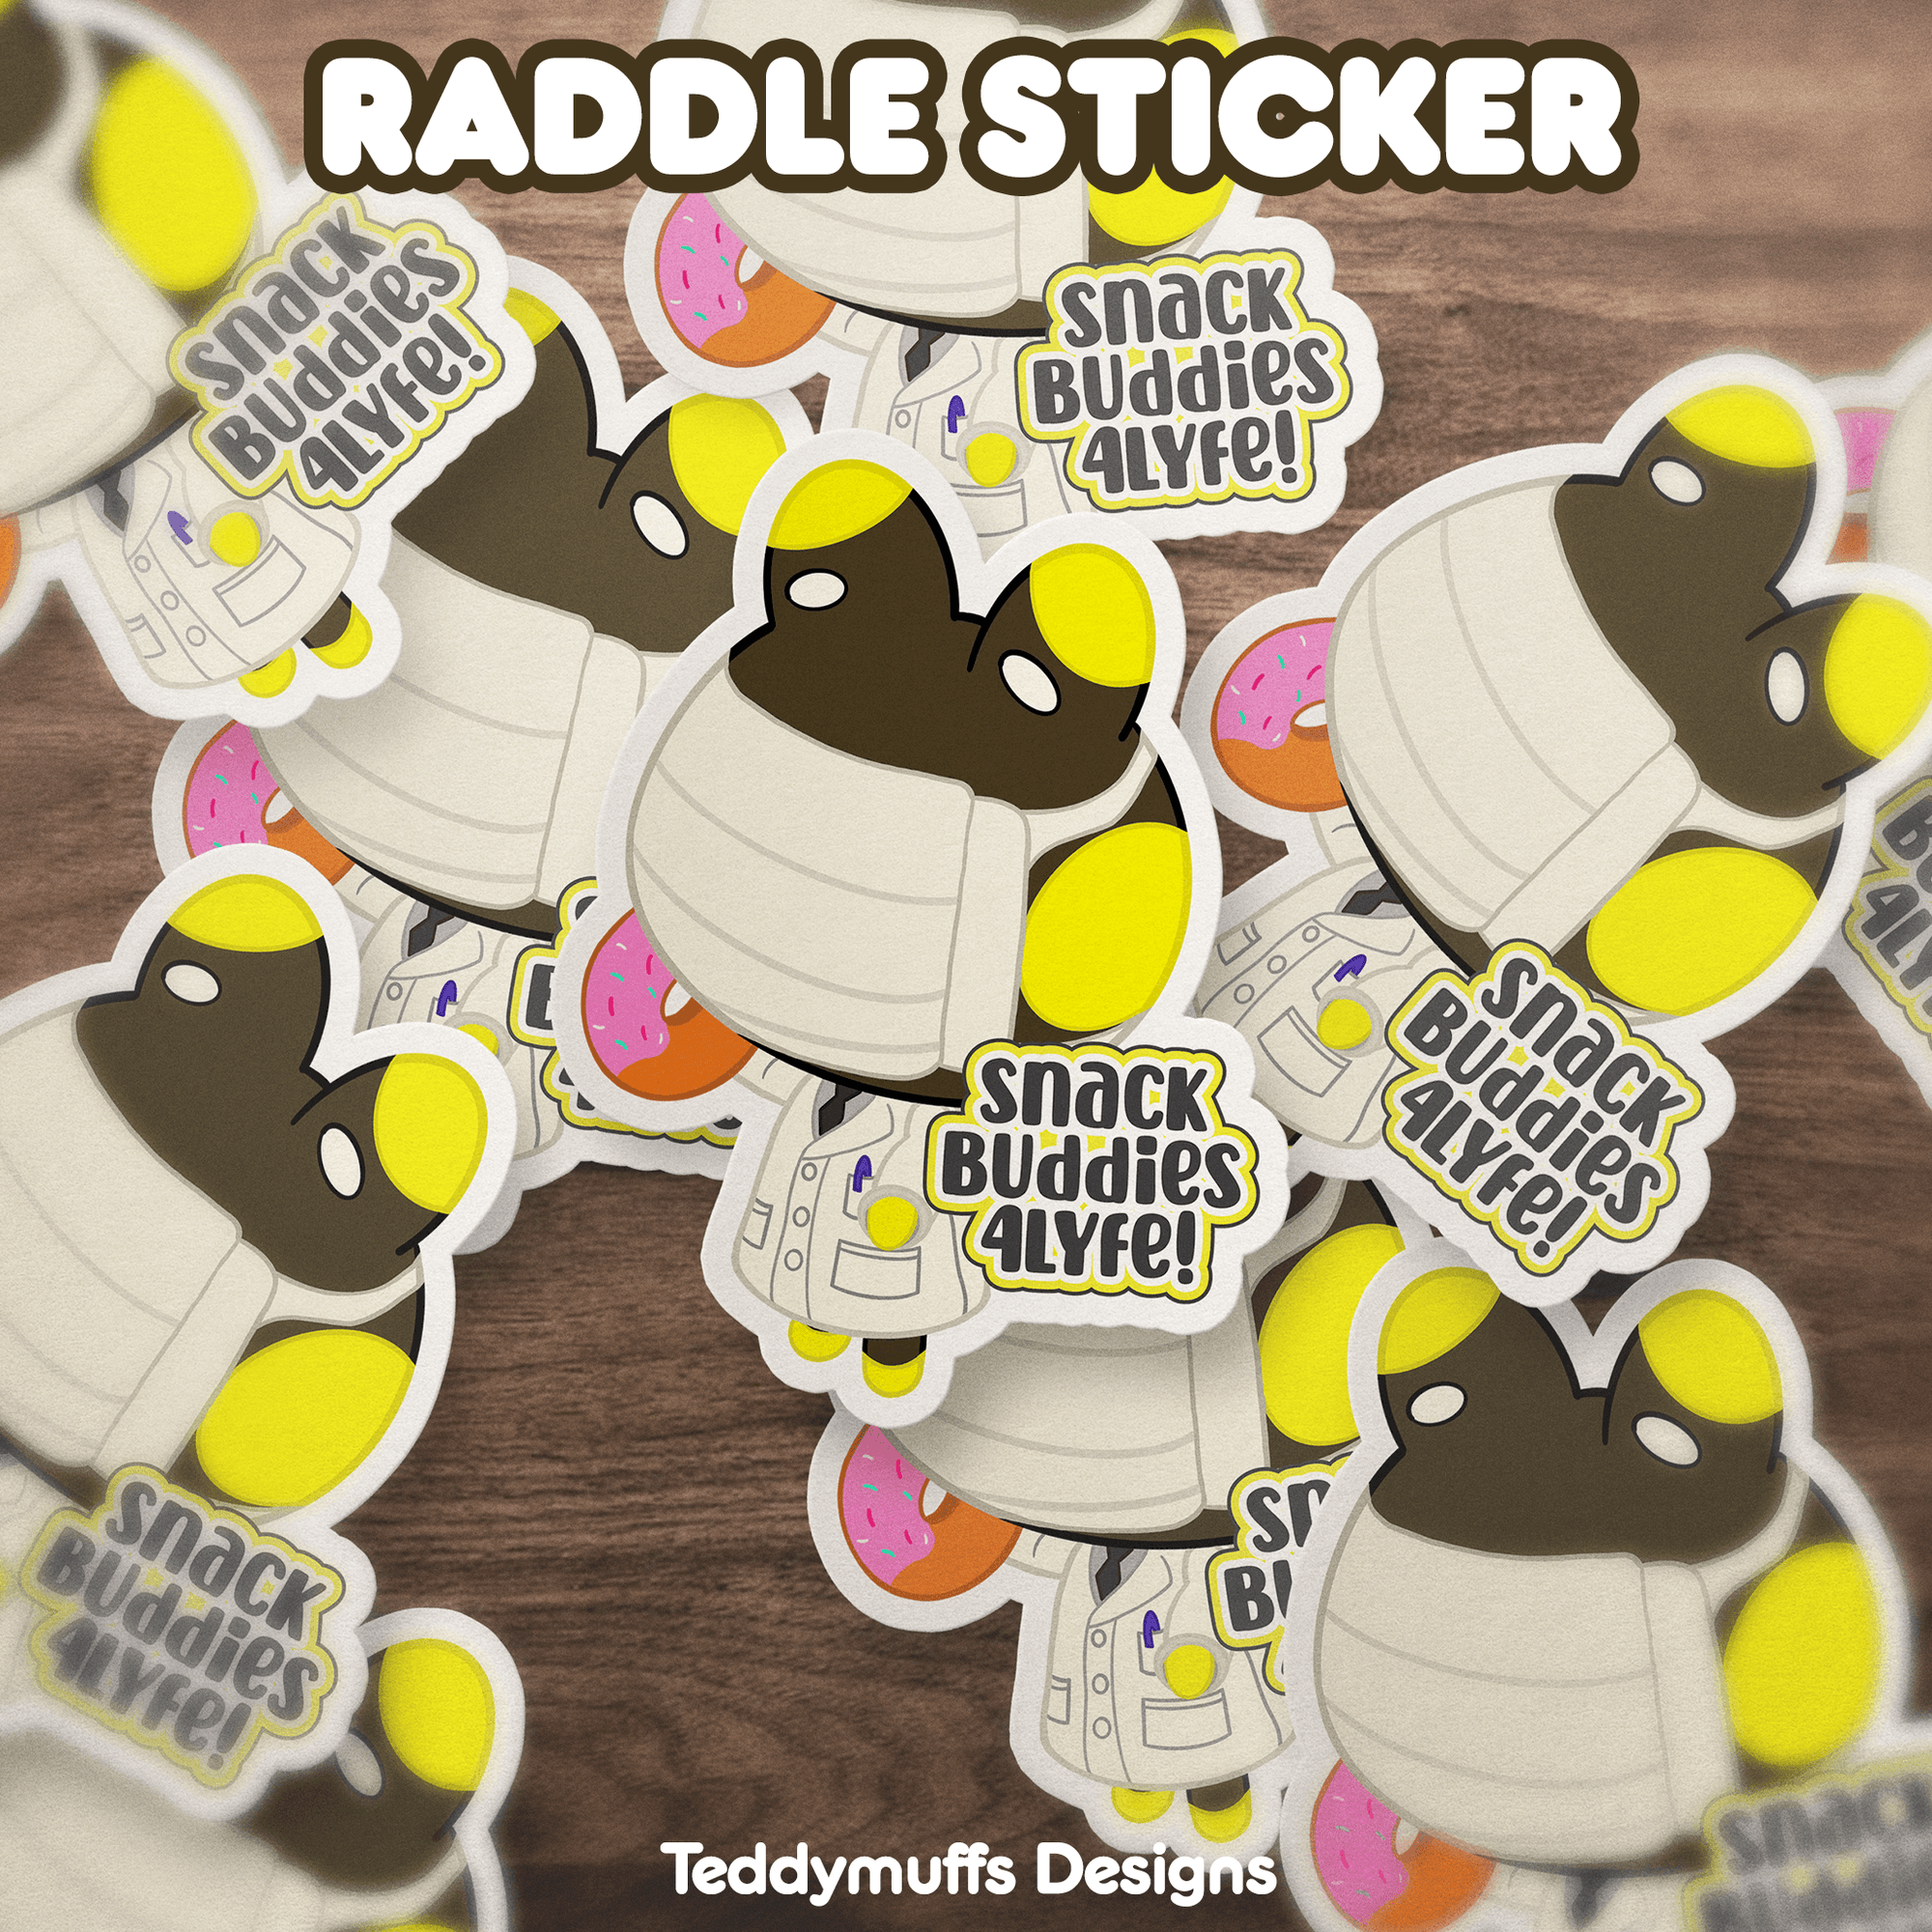 Raddle "Snack Buddy" Sticker - Teddymuffs Designs